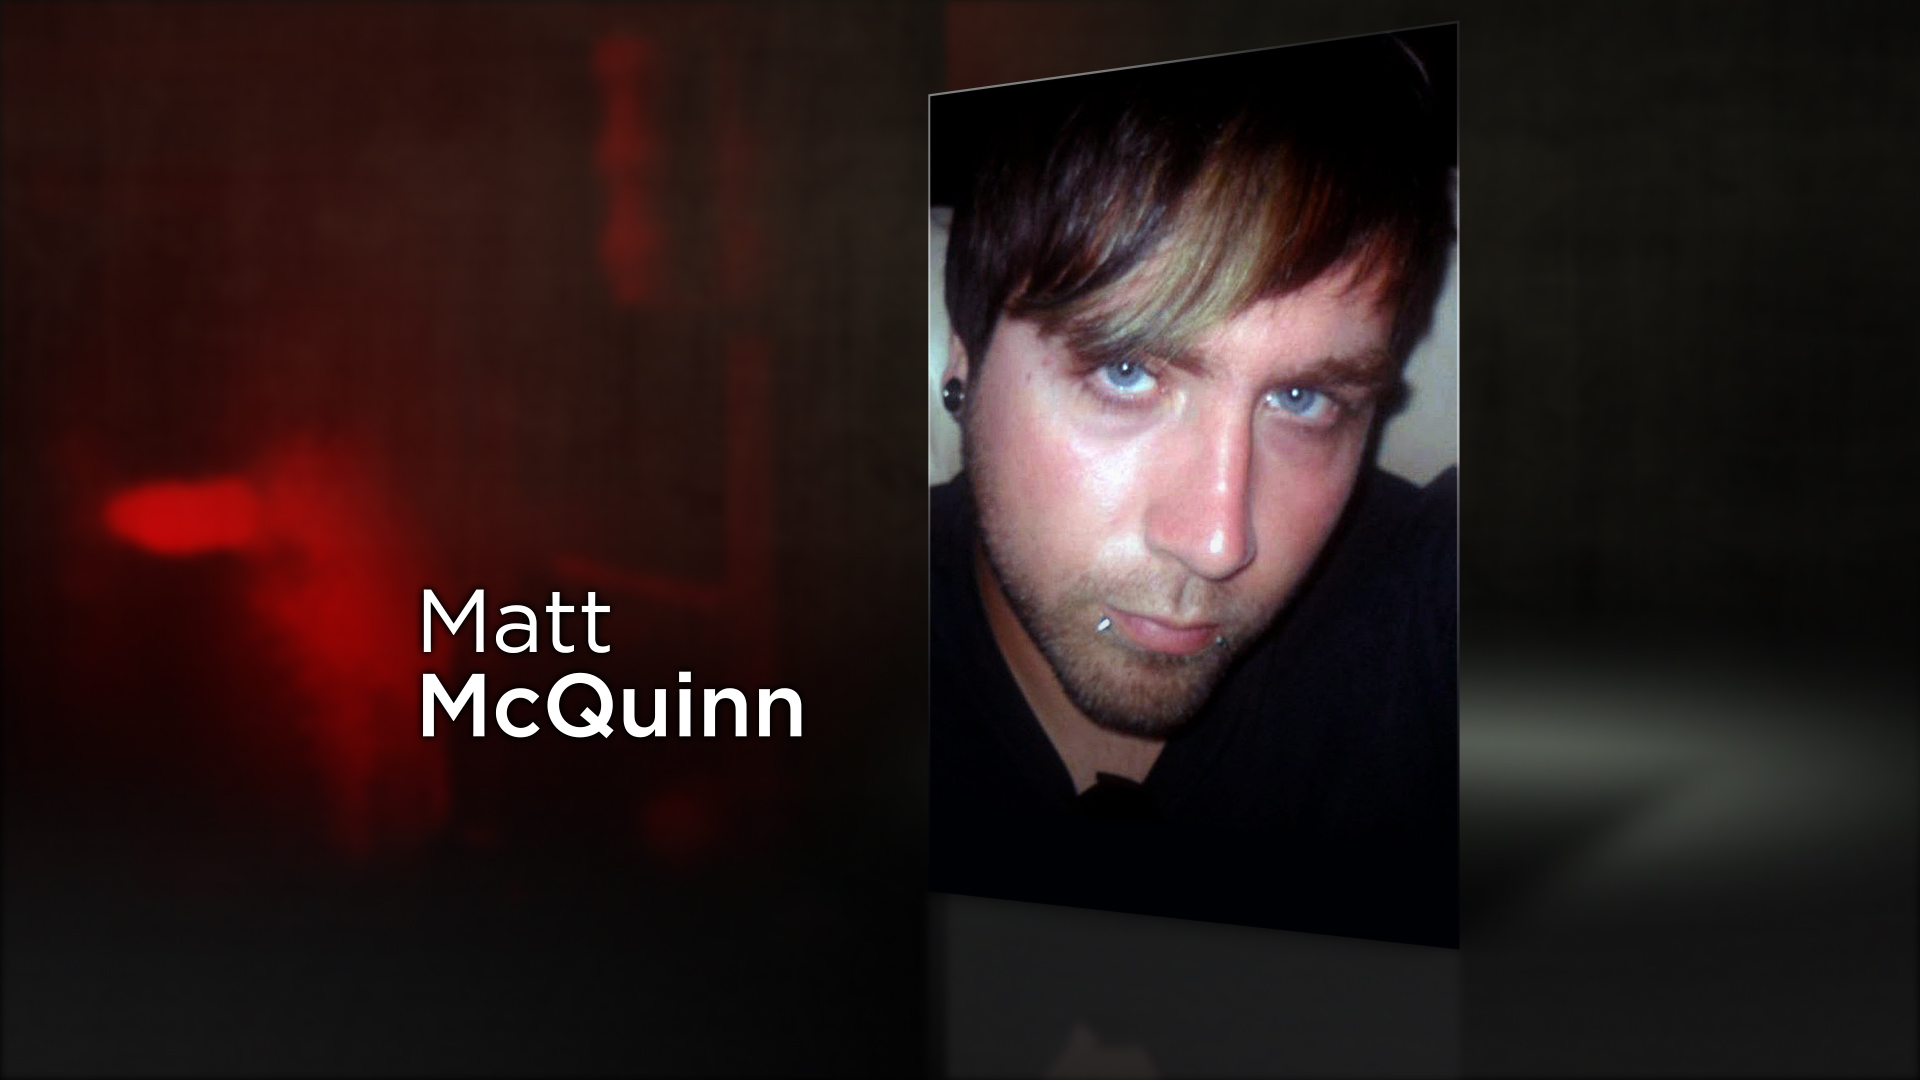 Matthew R. McQuinn, 27